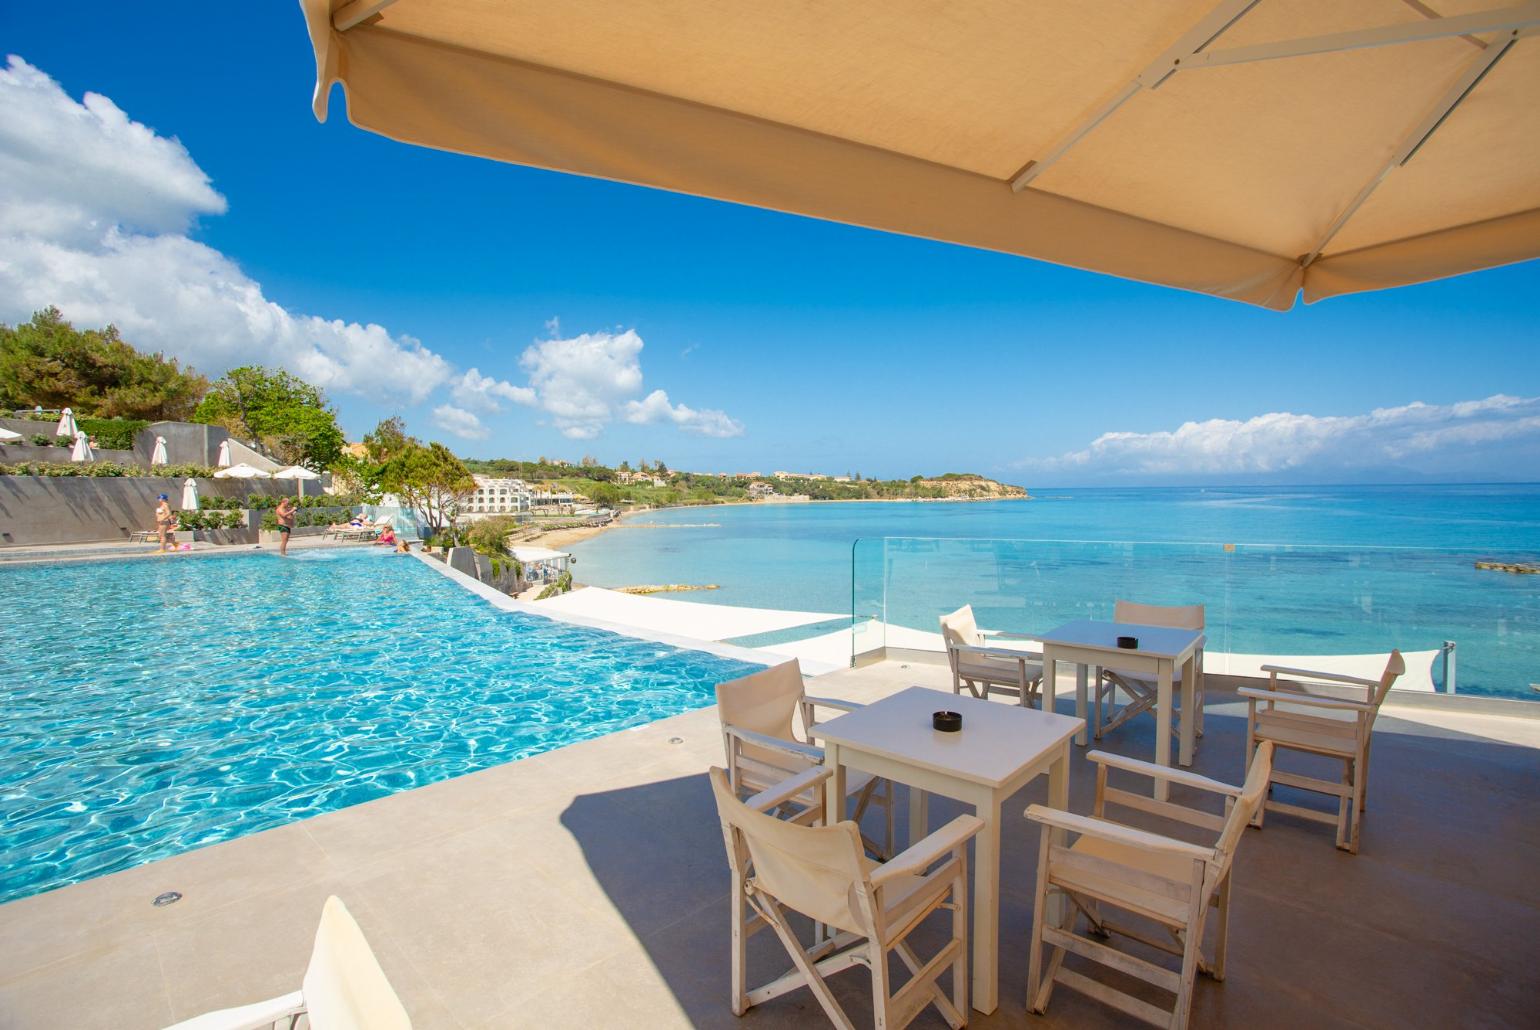 Restaurant and pool at Sentido Alexandra Beach Resort